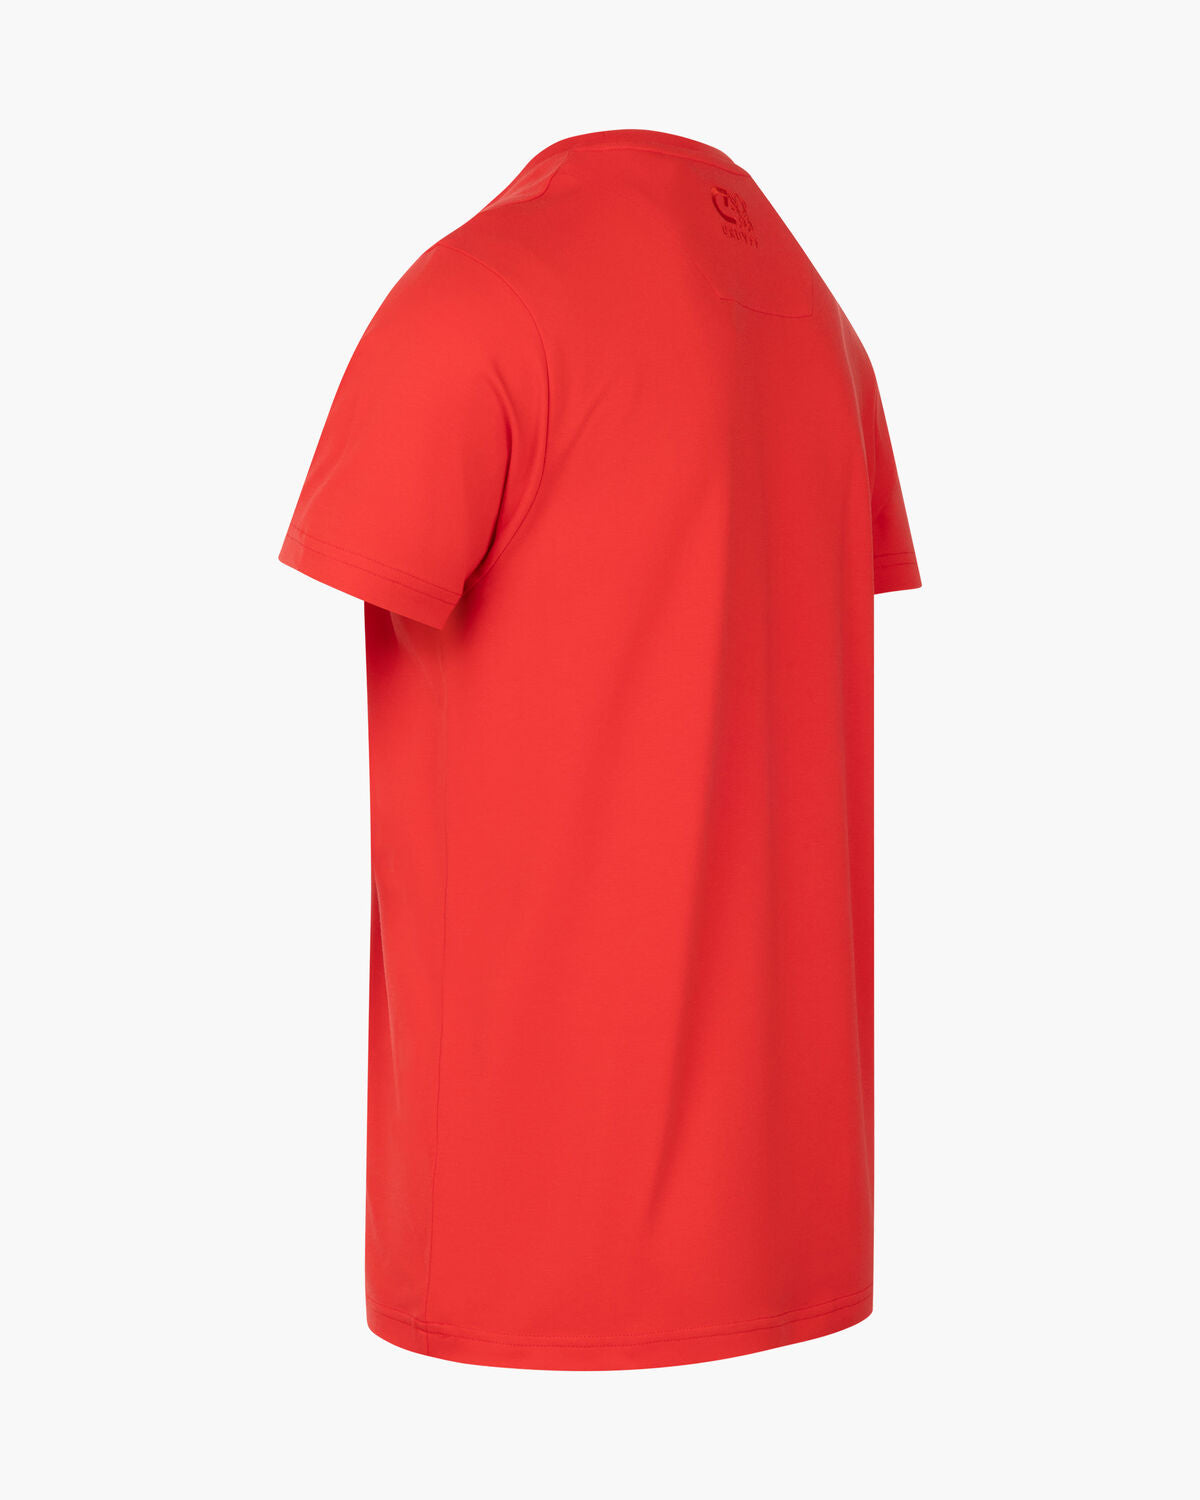 Camiseta CRUYFF ESTRU red - CA242012 300